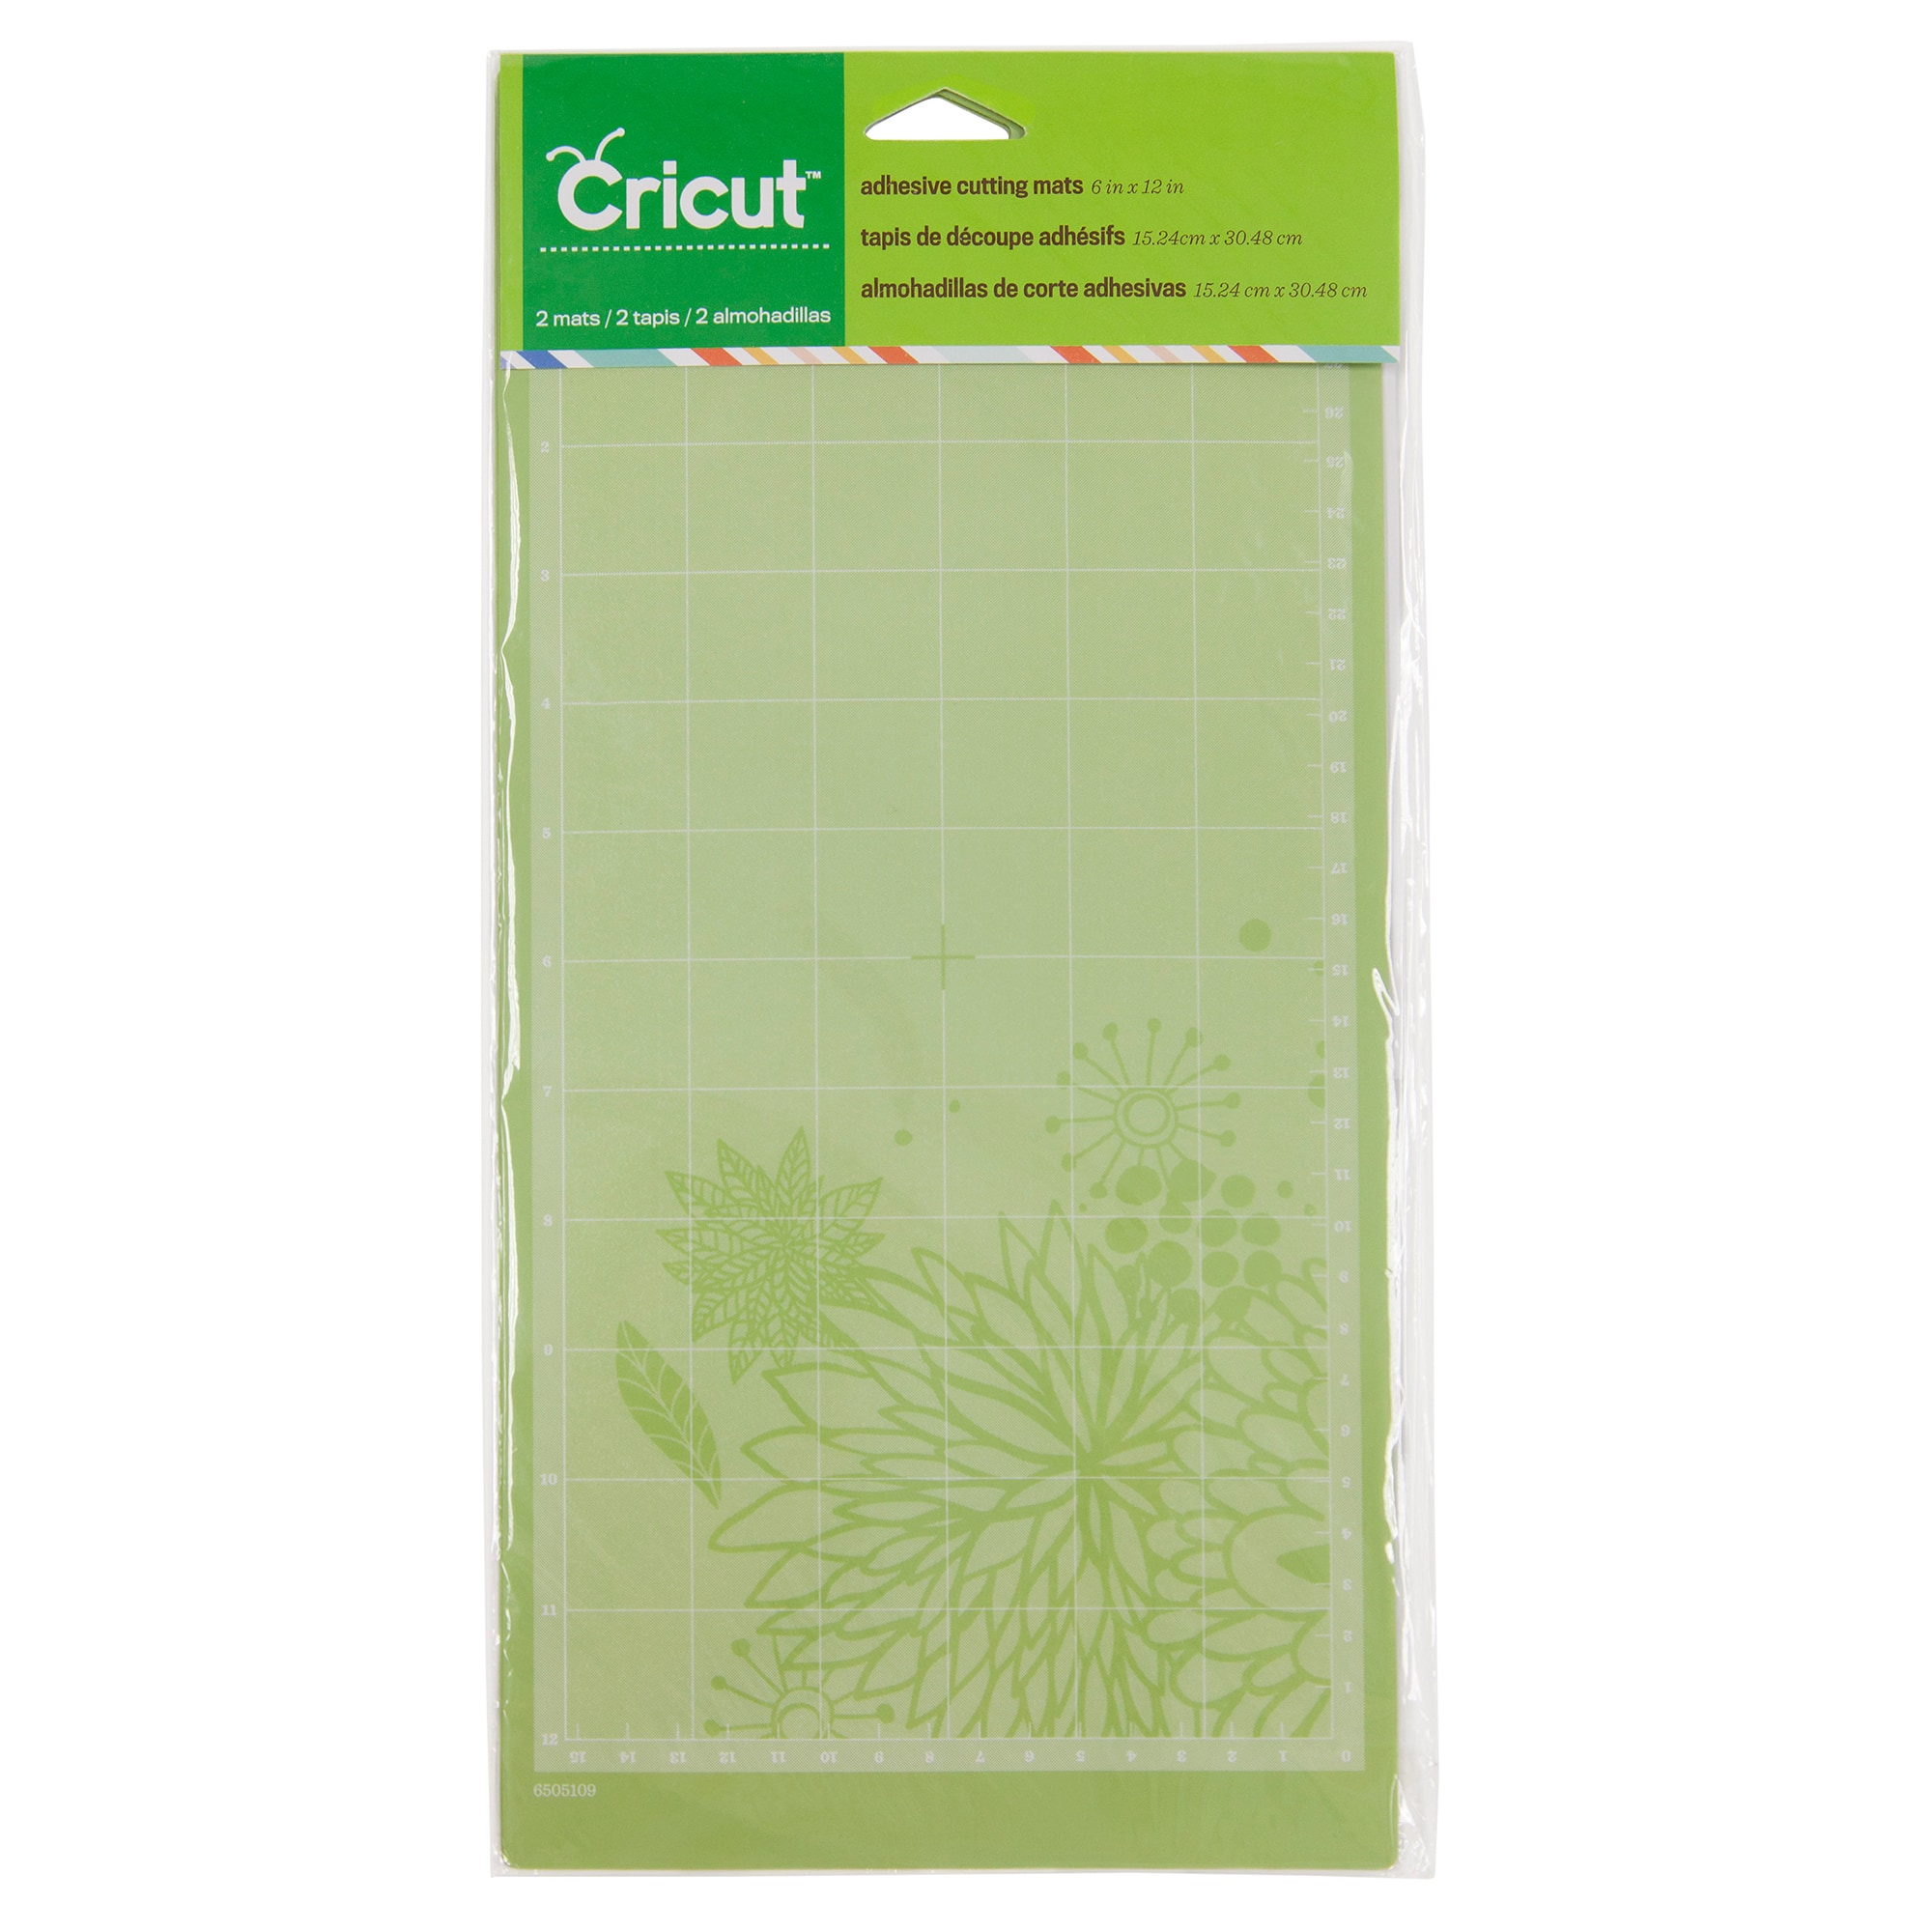 Cricut Adhesive Cutting Mats